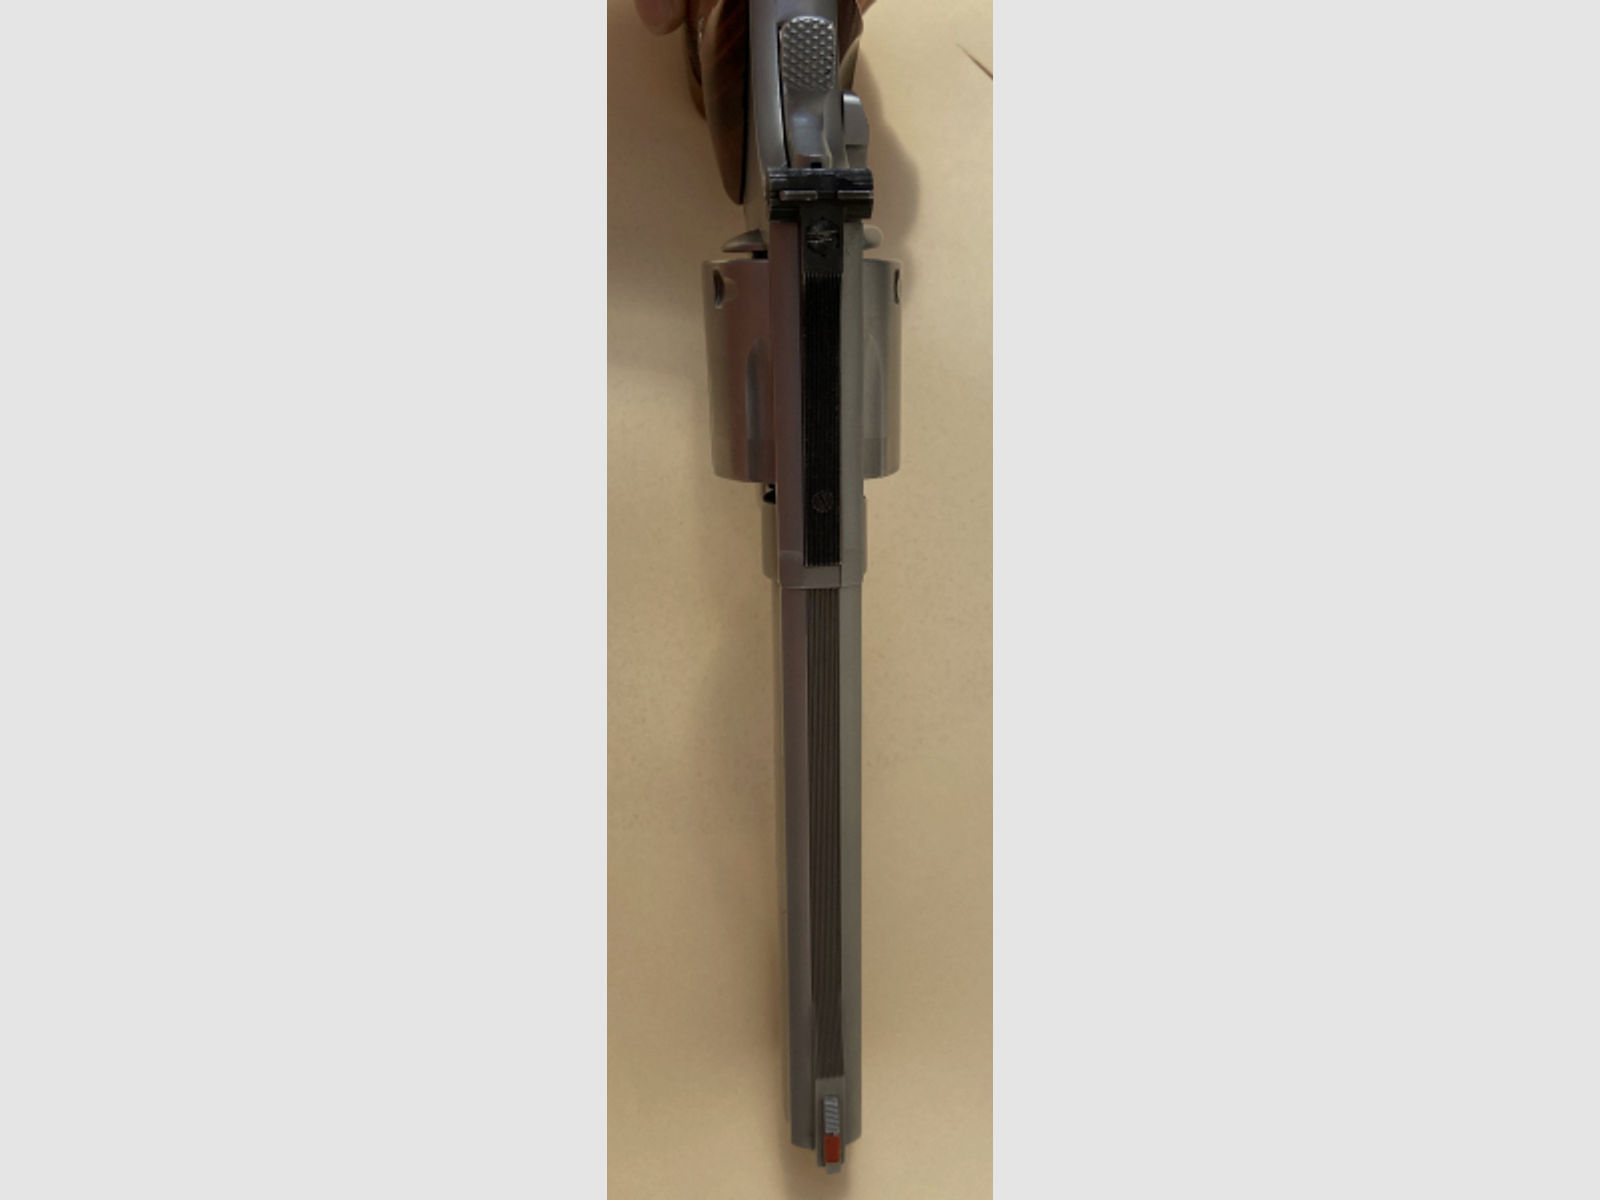 Revolver Smith & Wesson Mod. 686